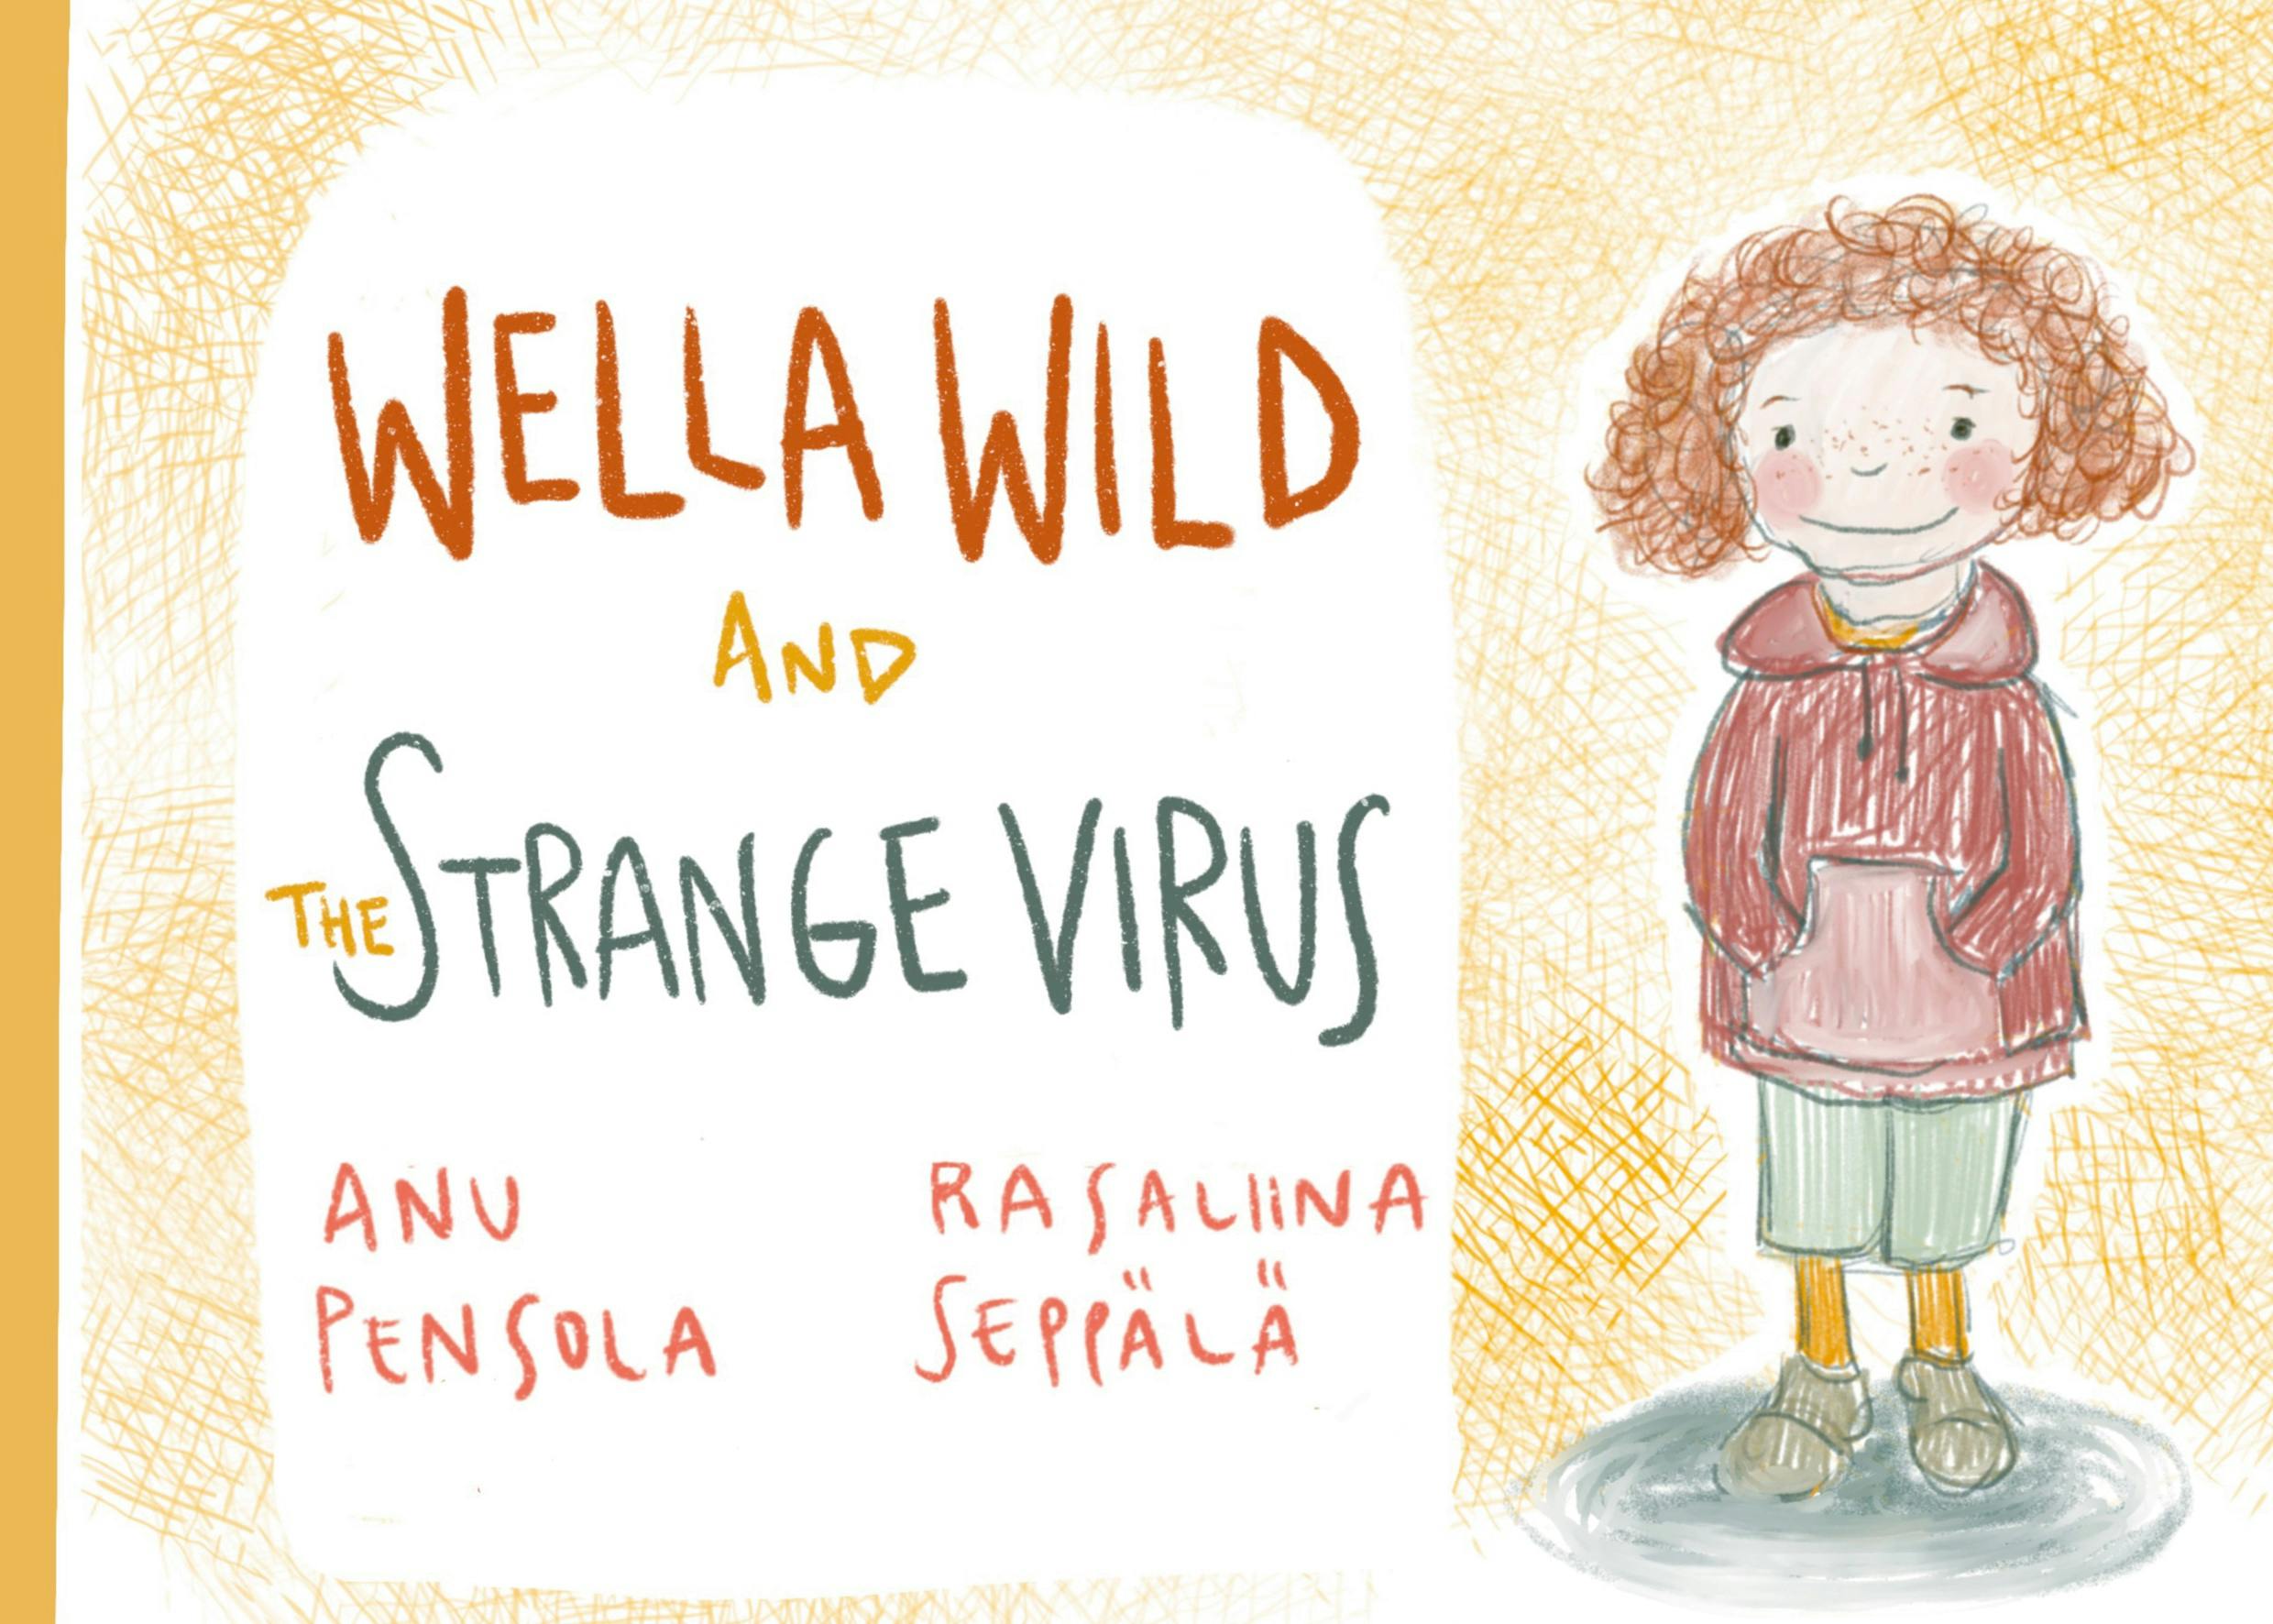 Wella Wild and the Strange Virus - undefined